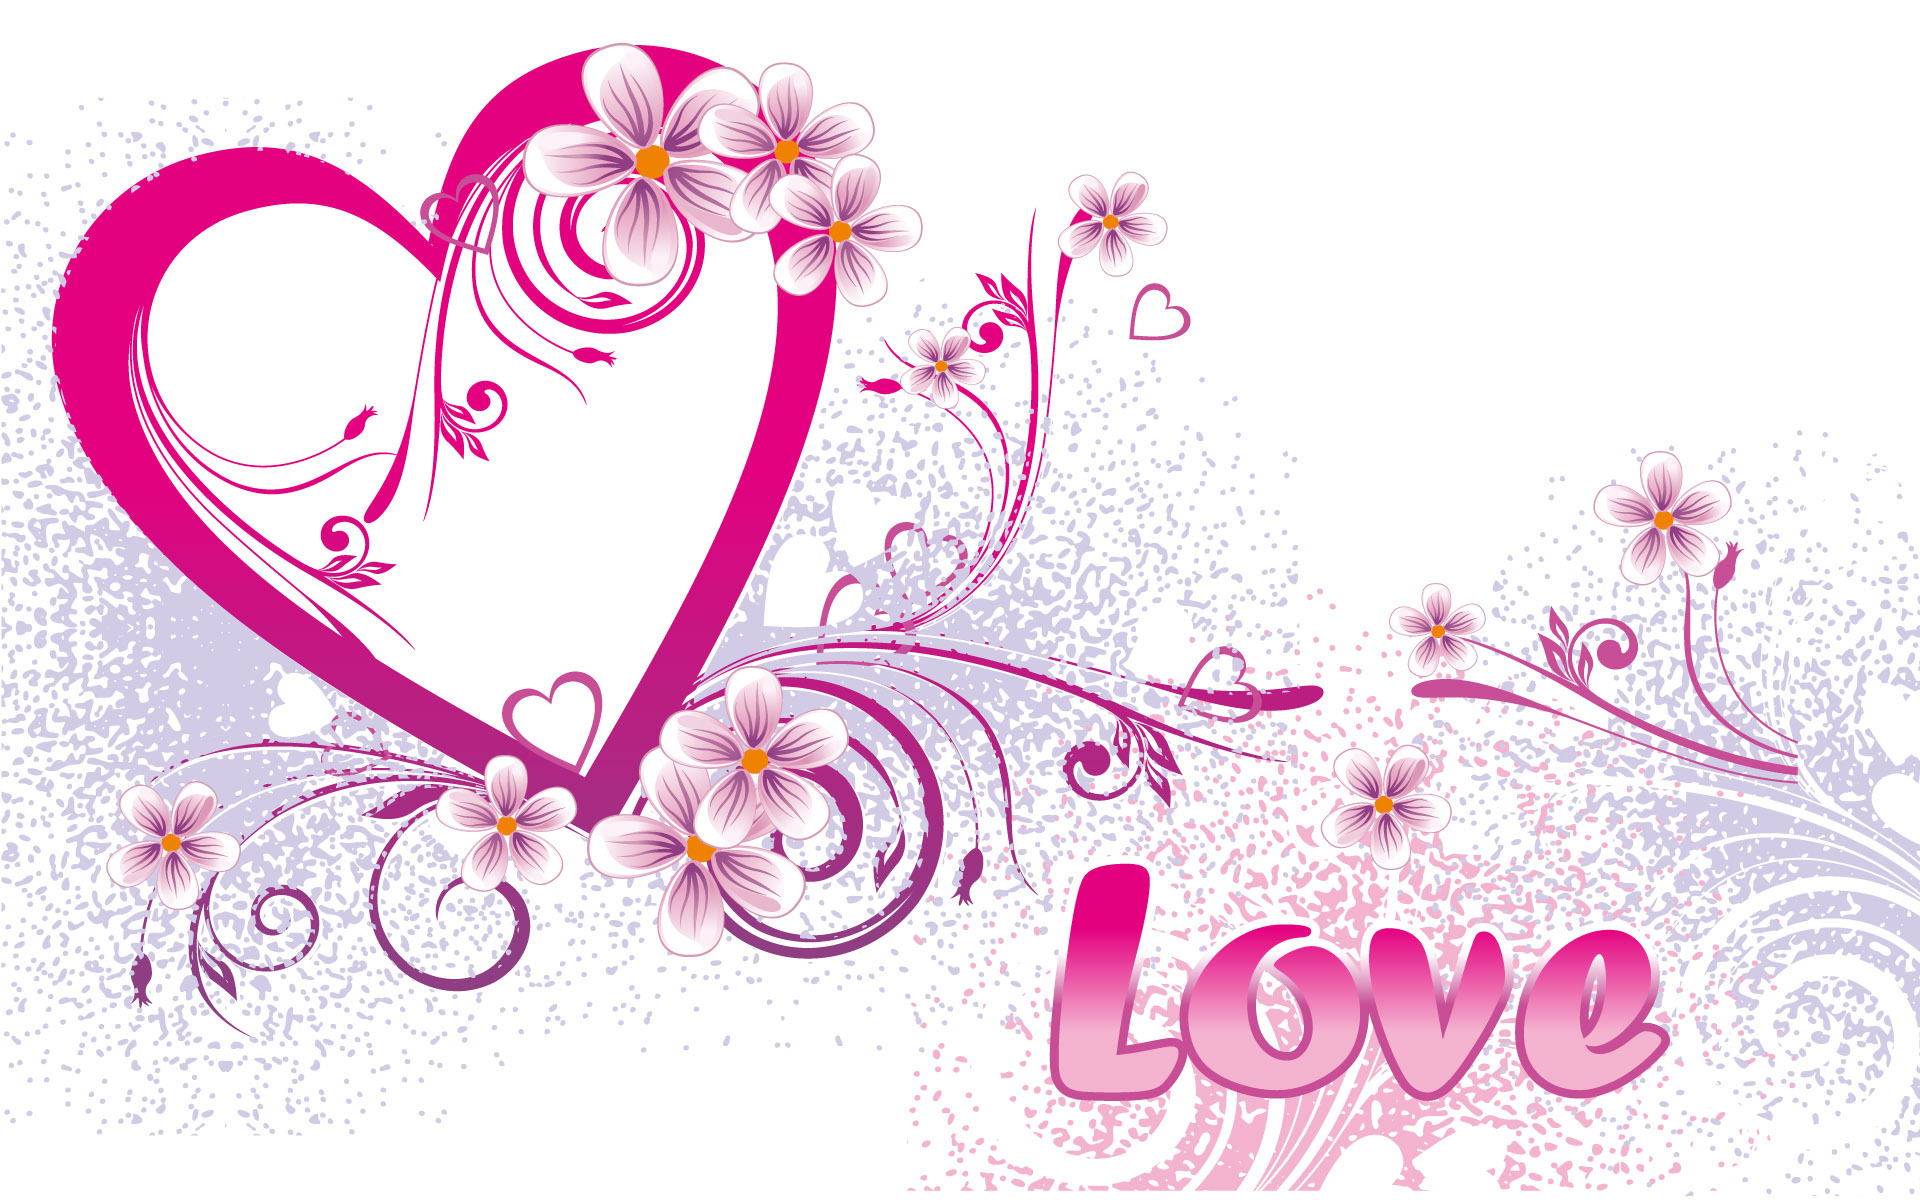 Sweet & Cute Love Wallpaper | HD Wallpapers Download